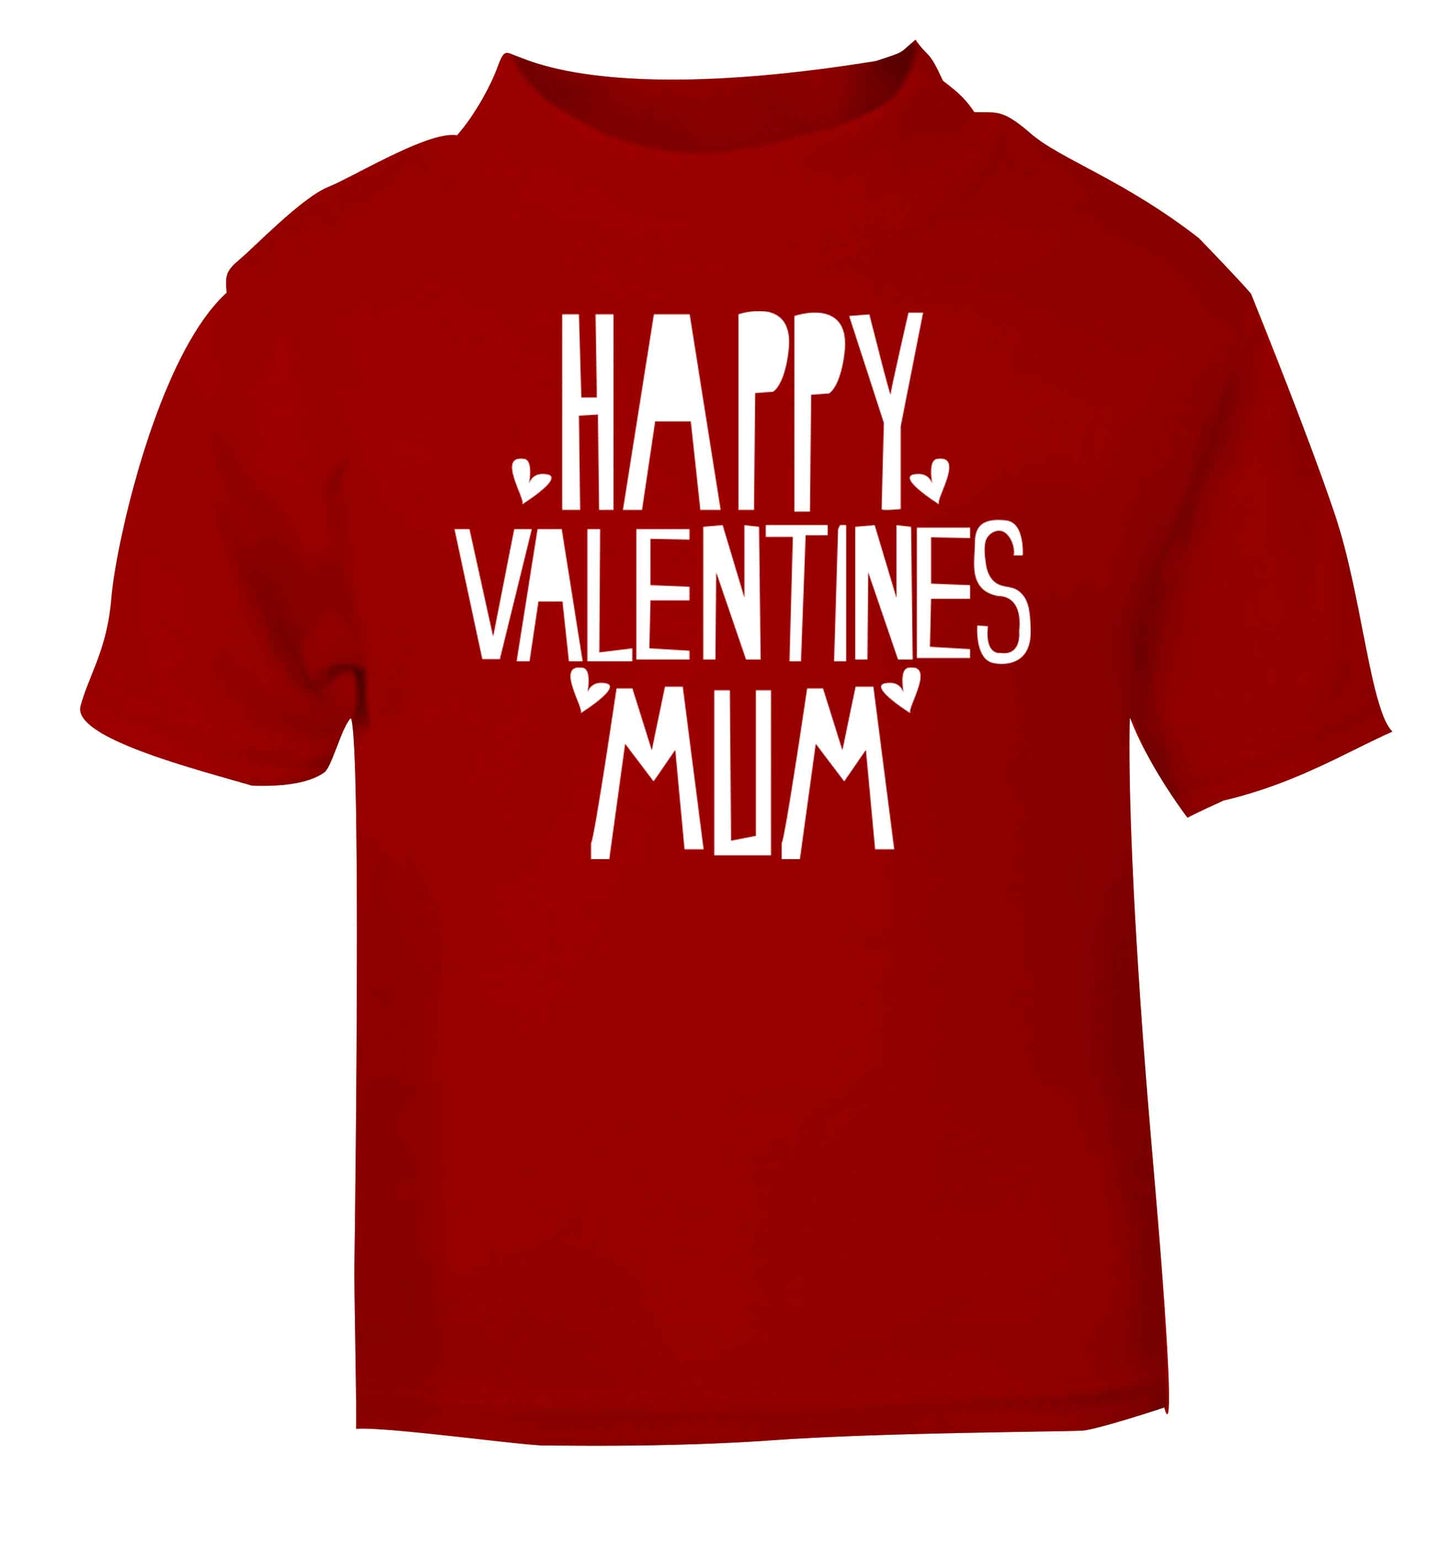 Happy valentines mum red baby toddler Tshirt 2 Years